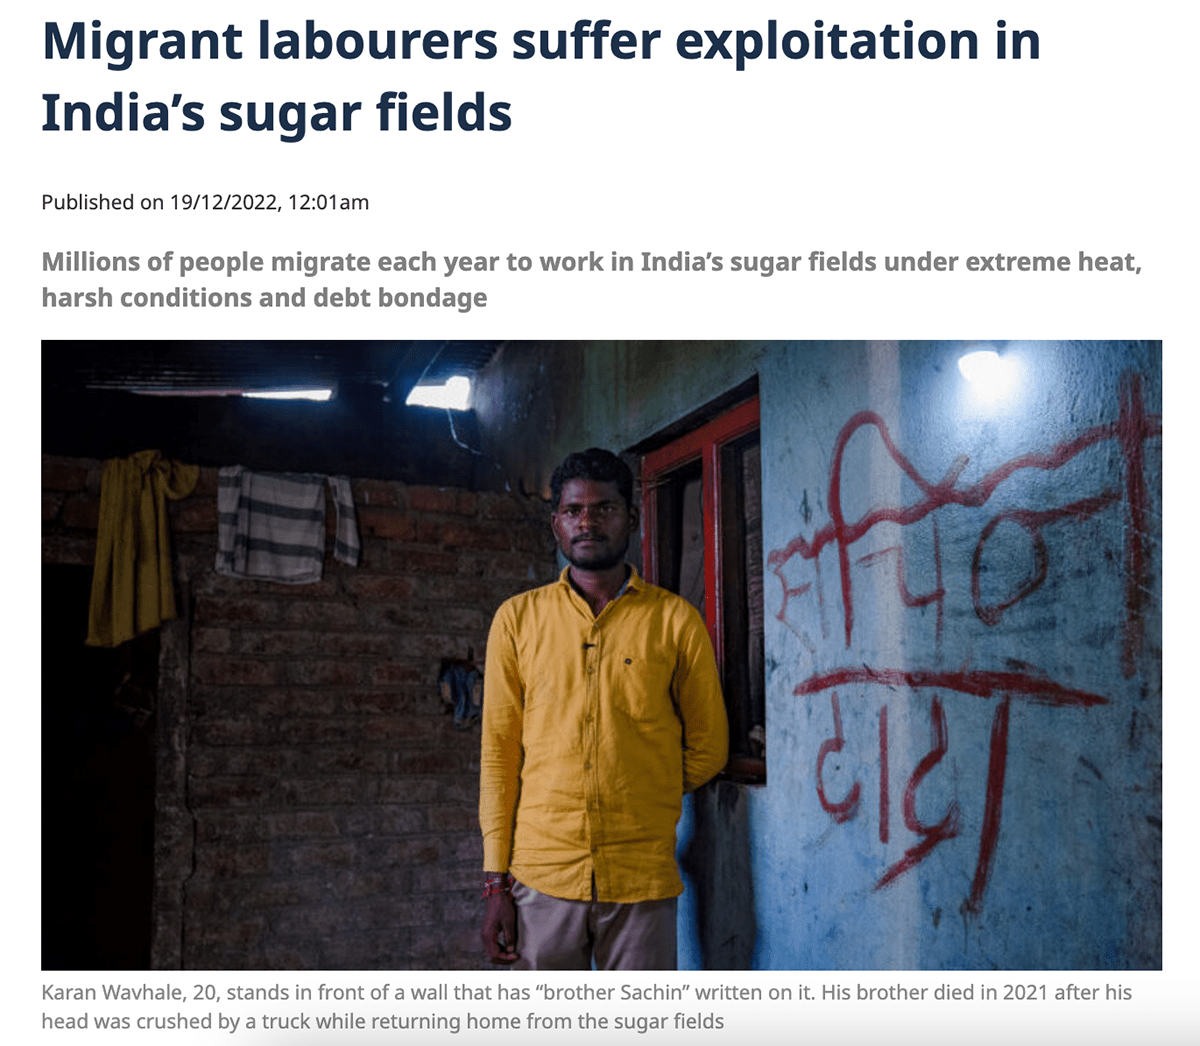 climate change exploitation farmers Labourers migration pulitzer center Sexual Abuse Sugarcane